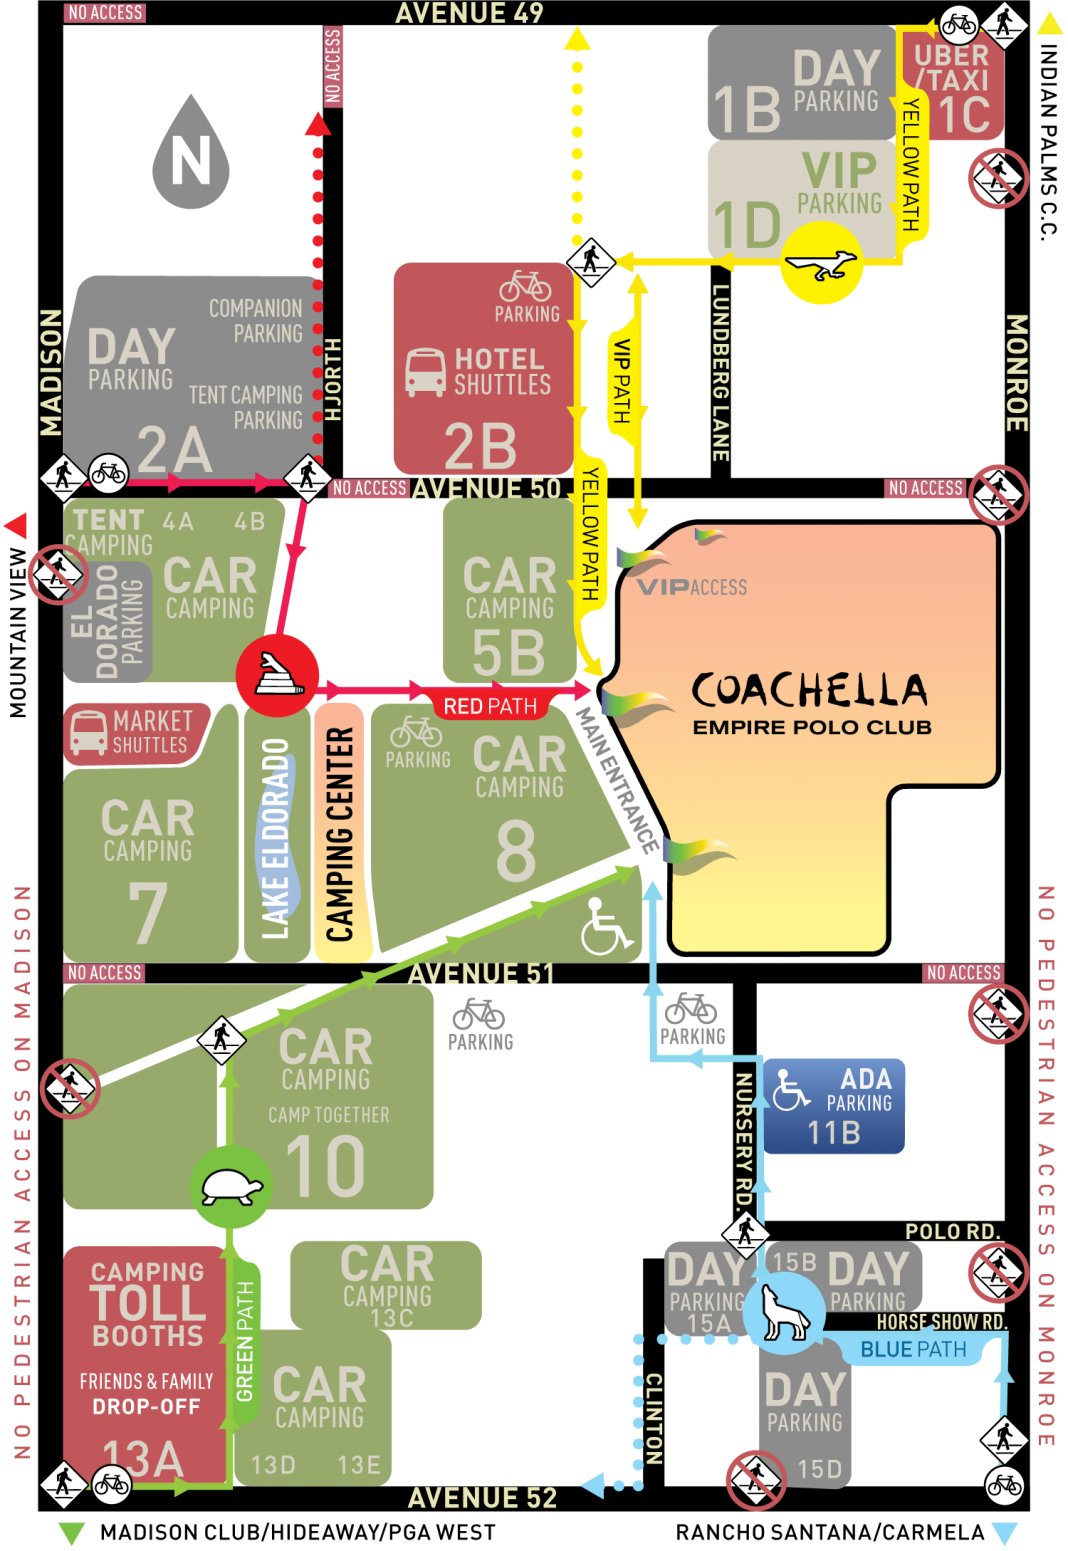 Coachella 2018 Set Times, Festival Map, & More! [Weekend 2 Update